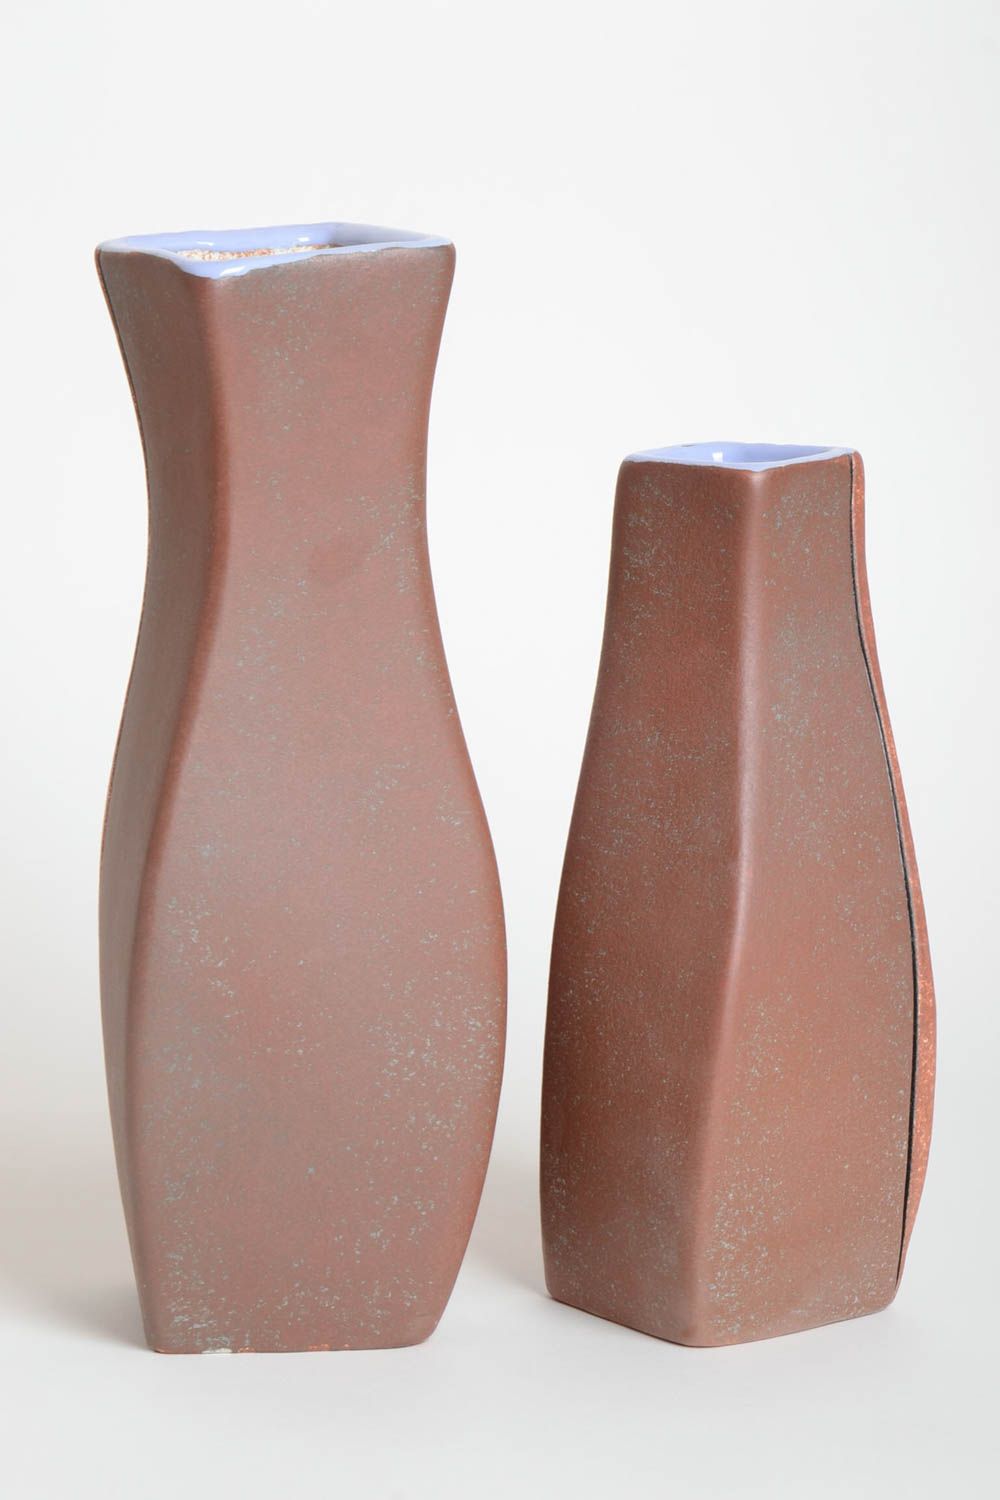 Vase set of handmade ceramic two vases in brown colors 4,6 lb photo 4